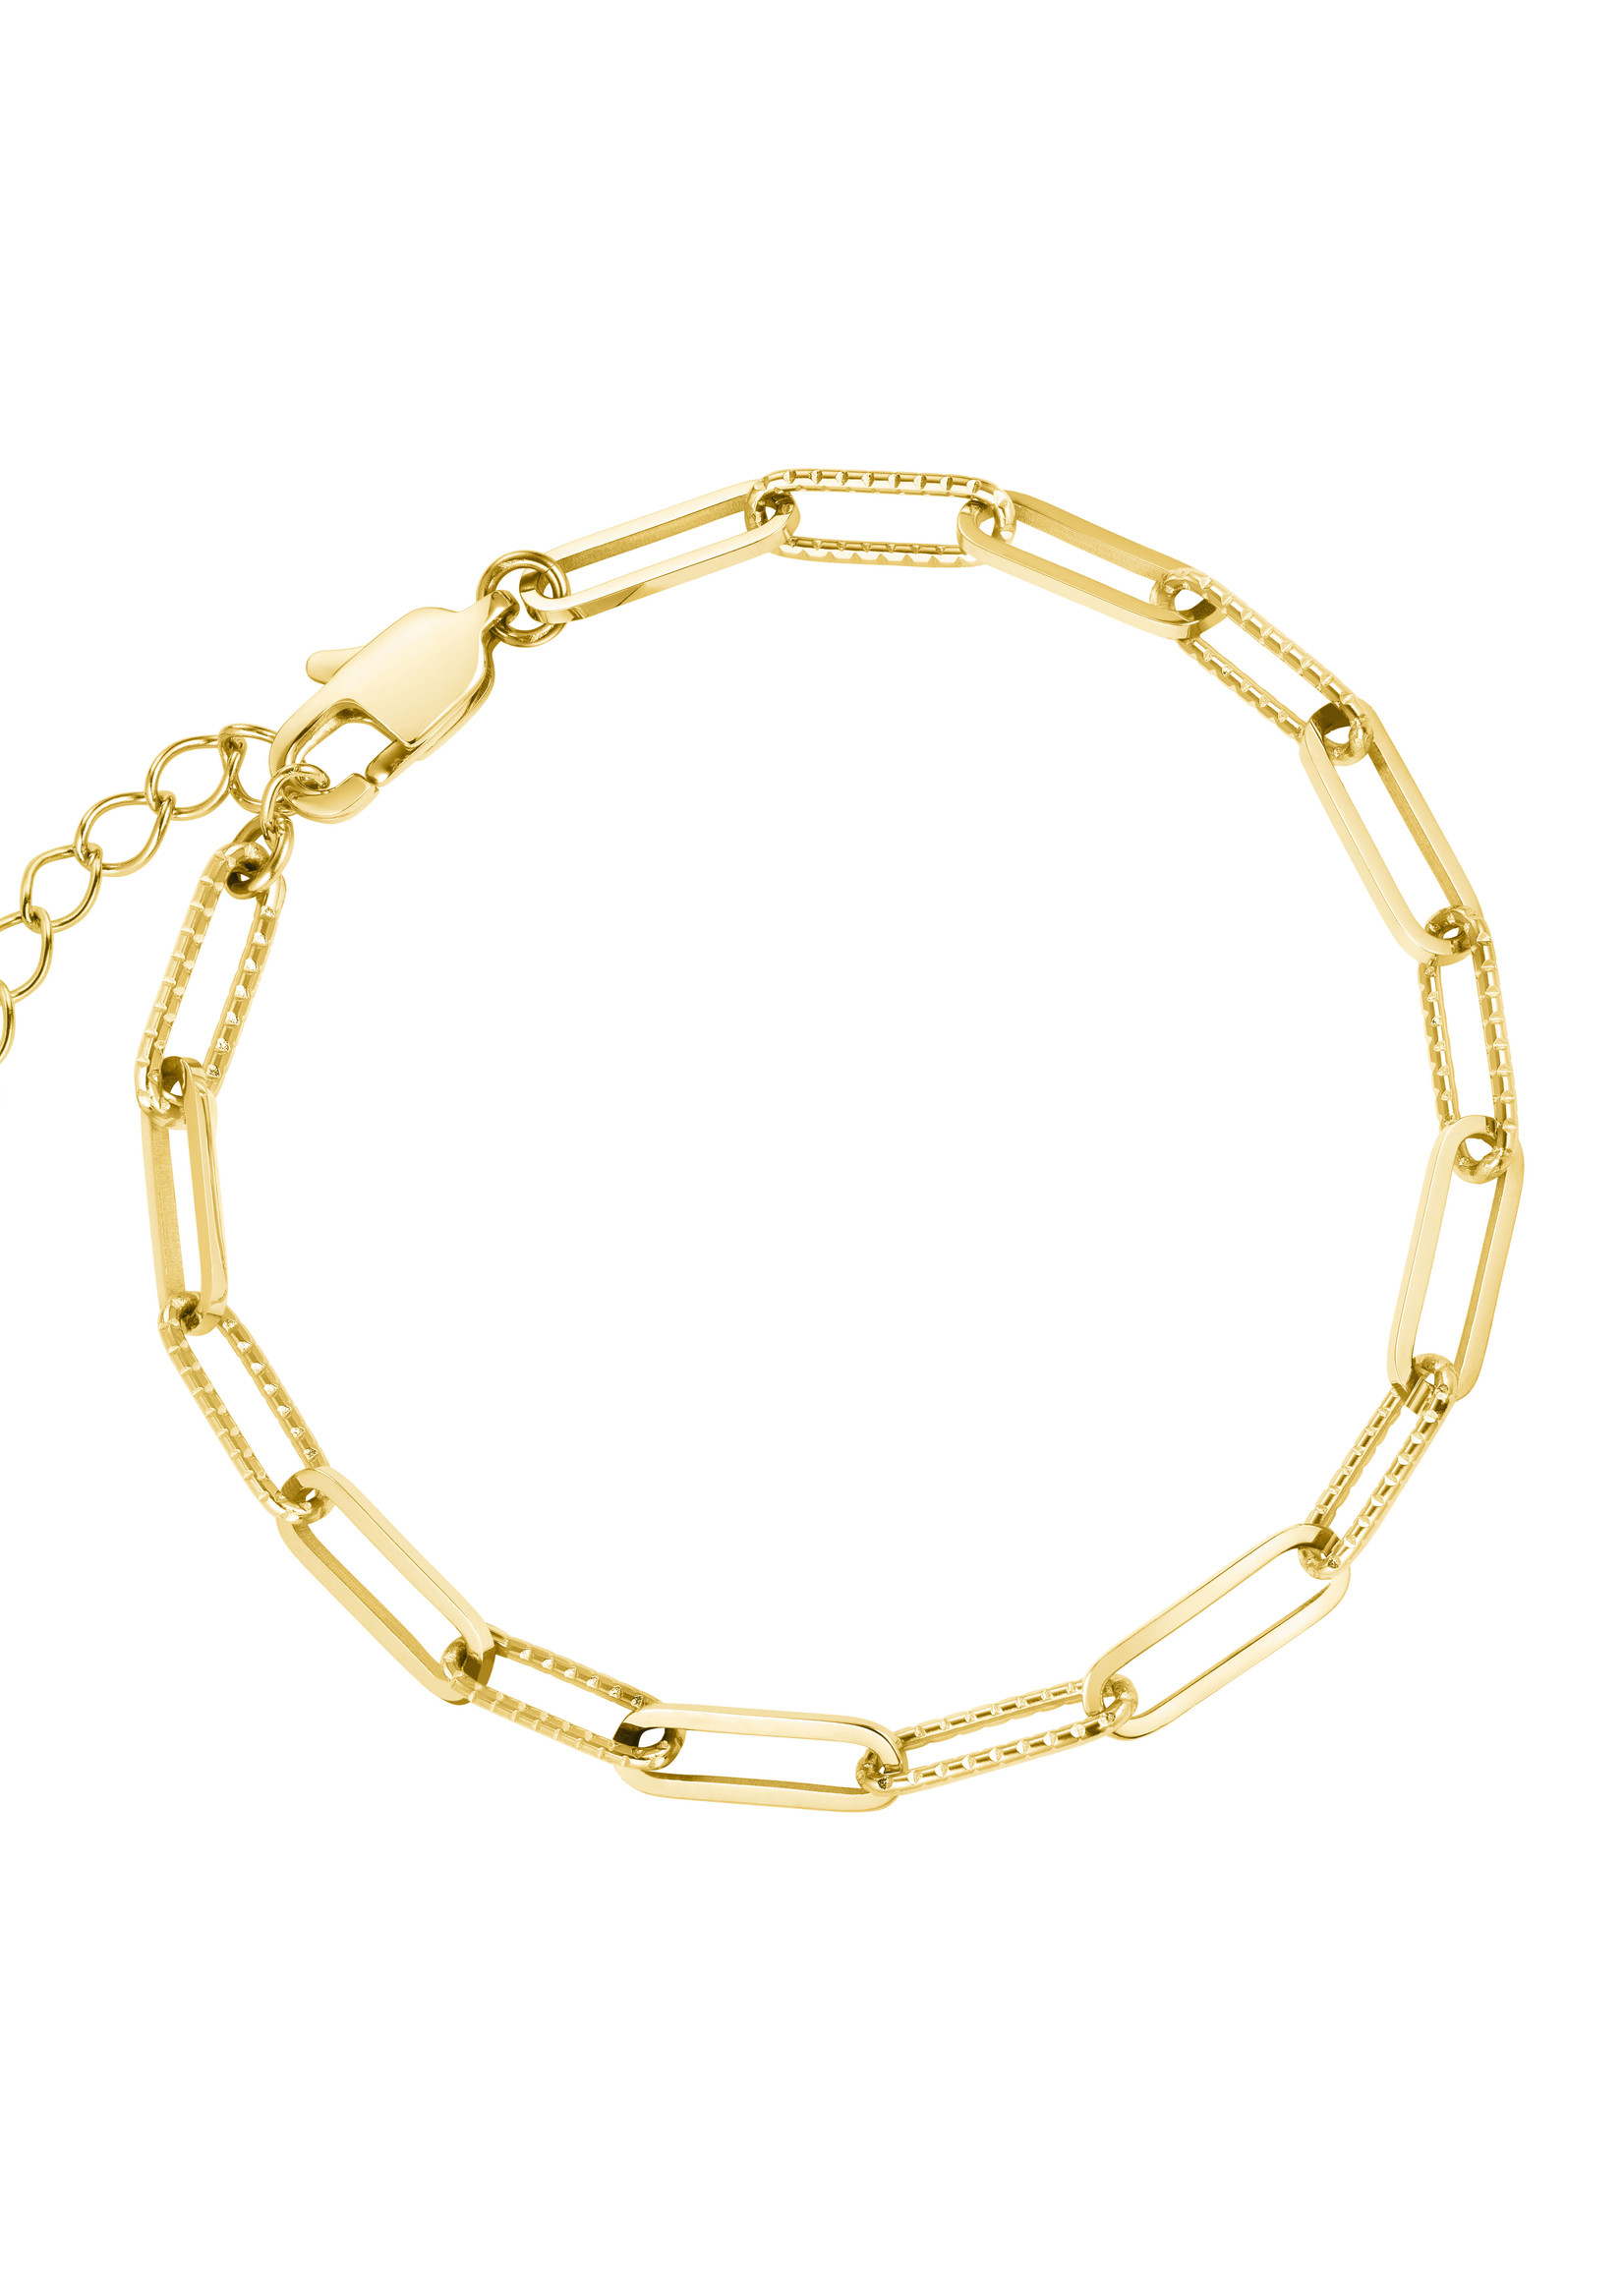 Rosefield hammered chain bracelet gold